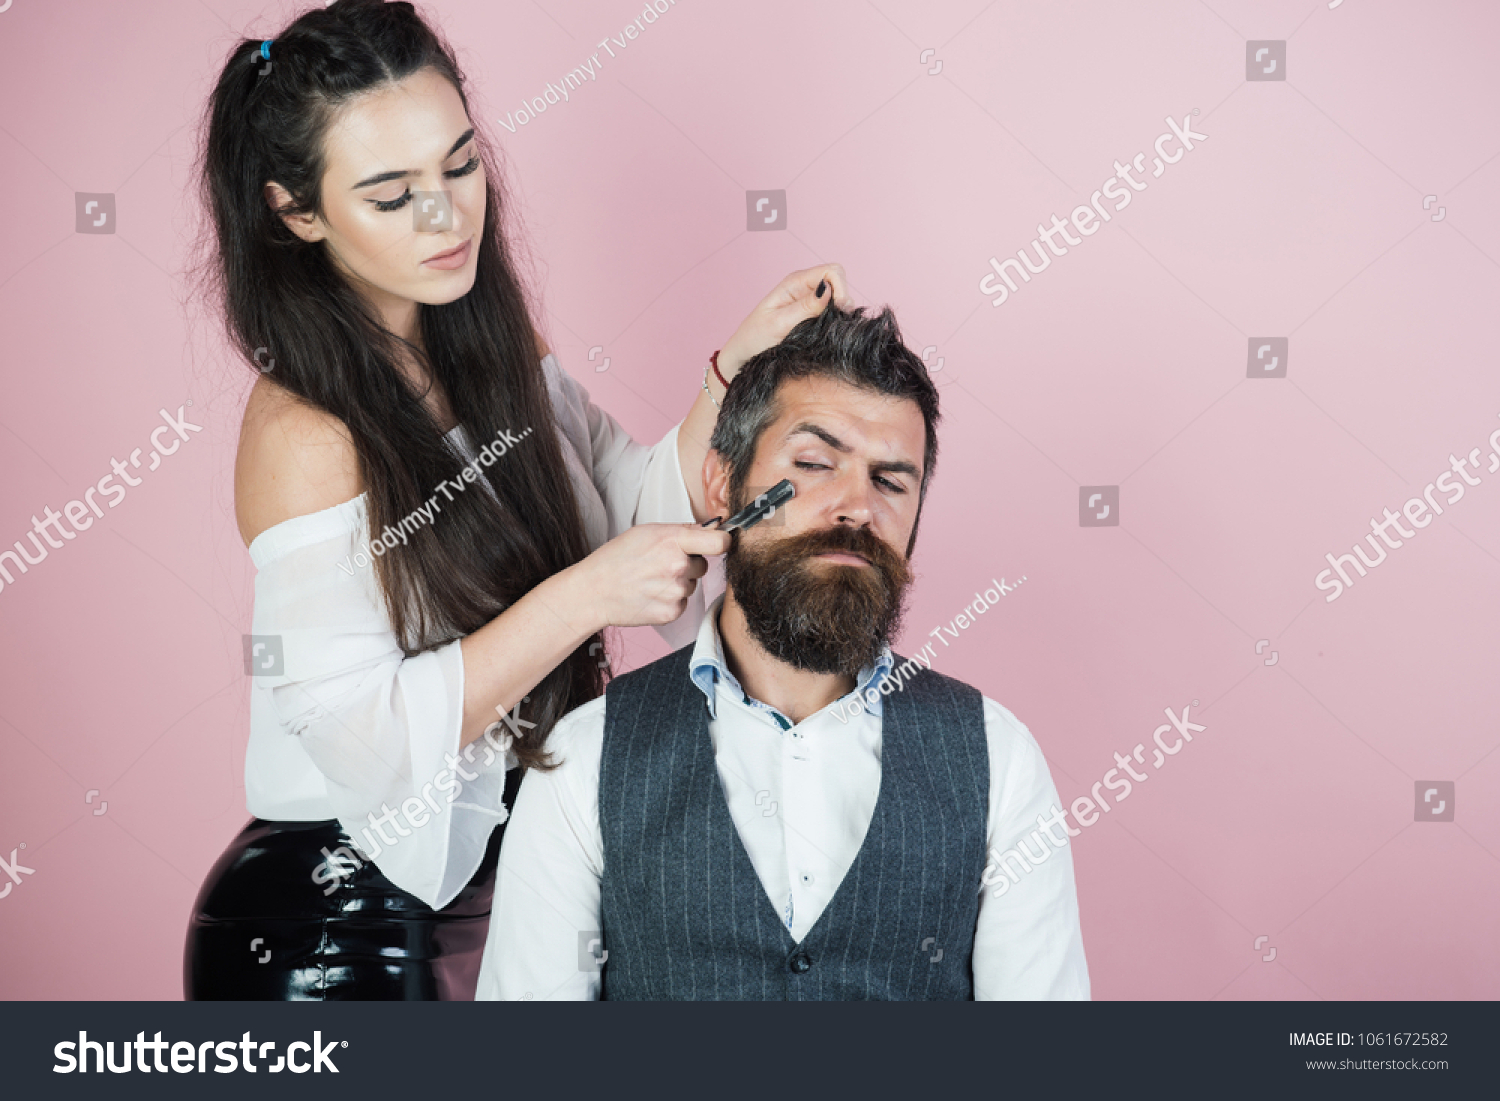 Razor Comb Cut Hair Man Stock Photo